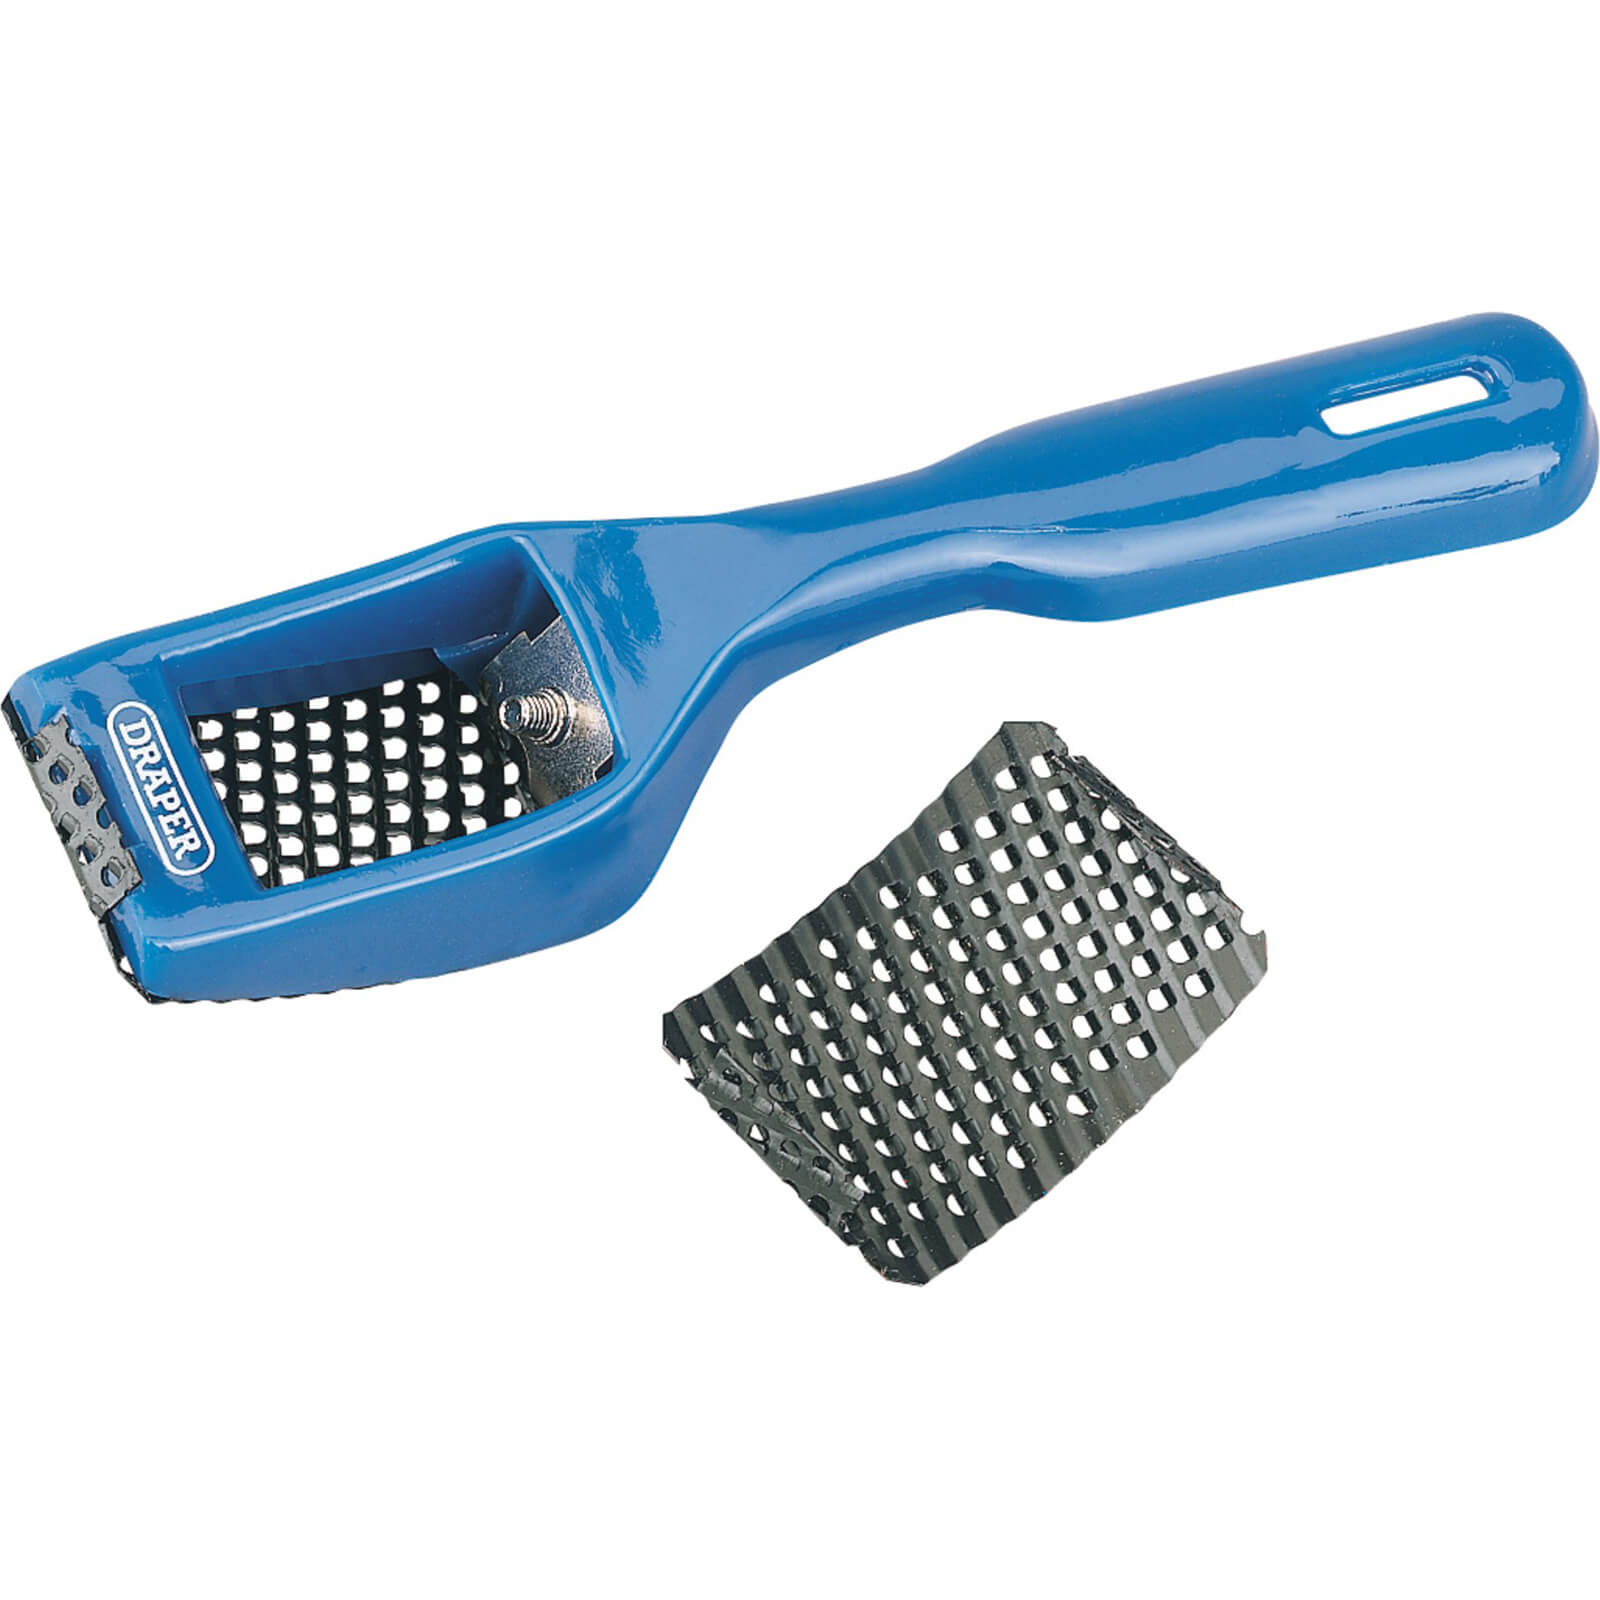 Image of Draper Multirasp Shaver